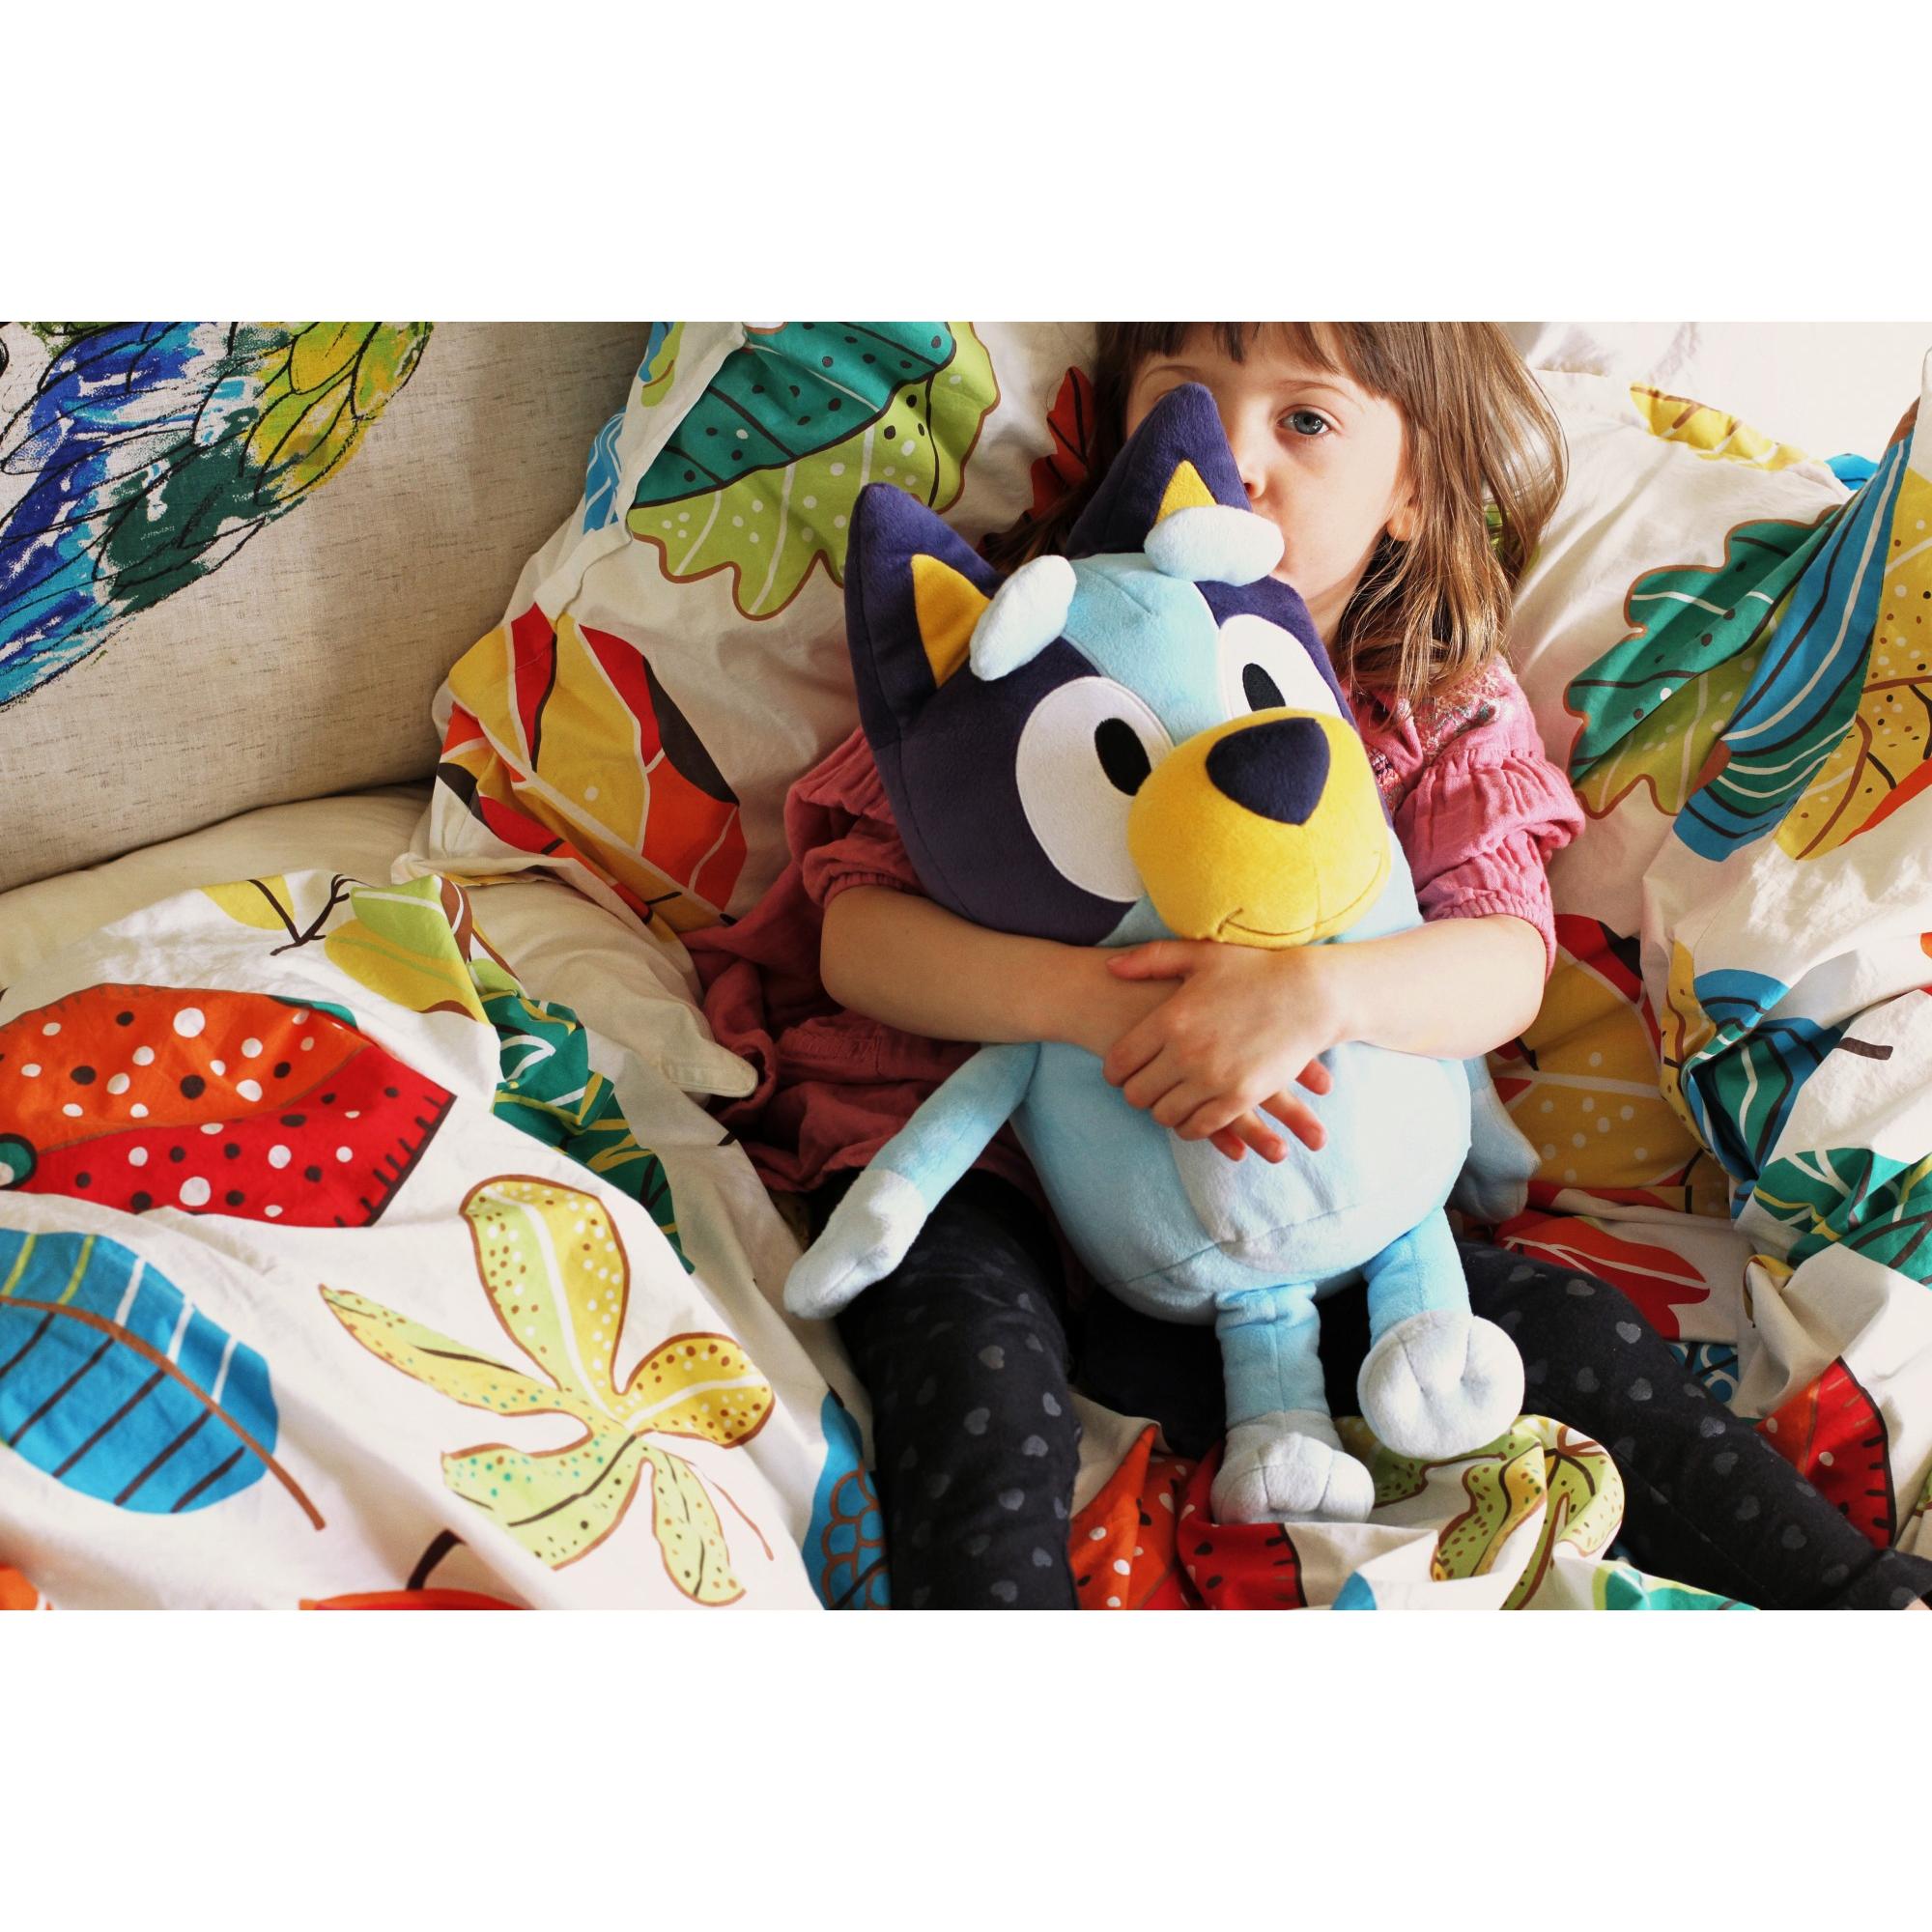 Bluey, Jumbo Plush, Single Pack, 18" Tall Bluey, Toys for Kids, Preschool, Ages 3+ - image 2 of 8